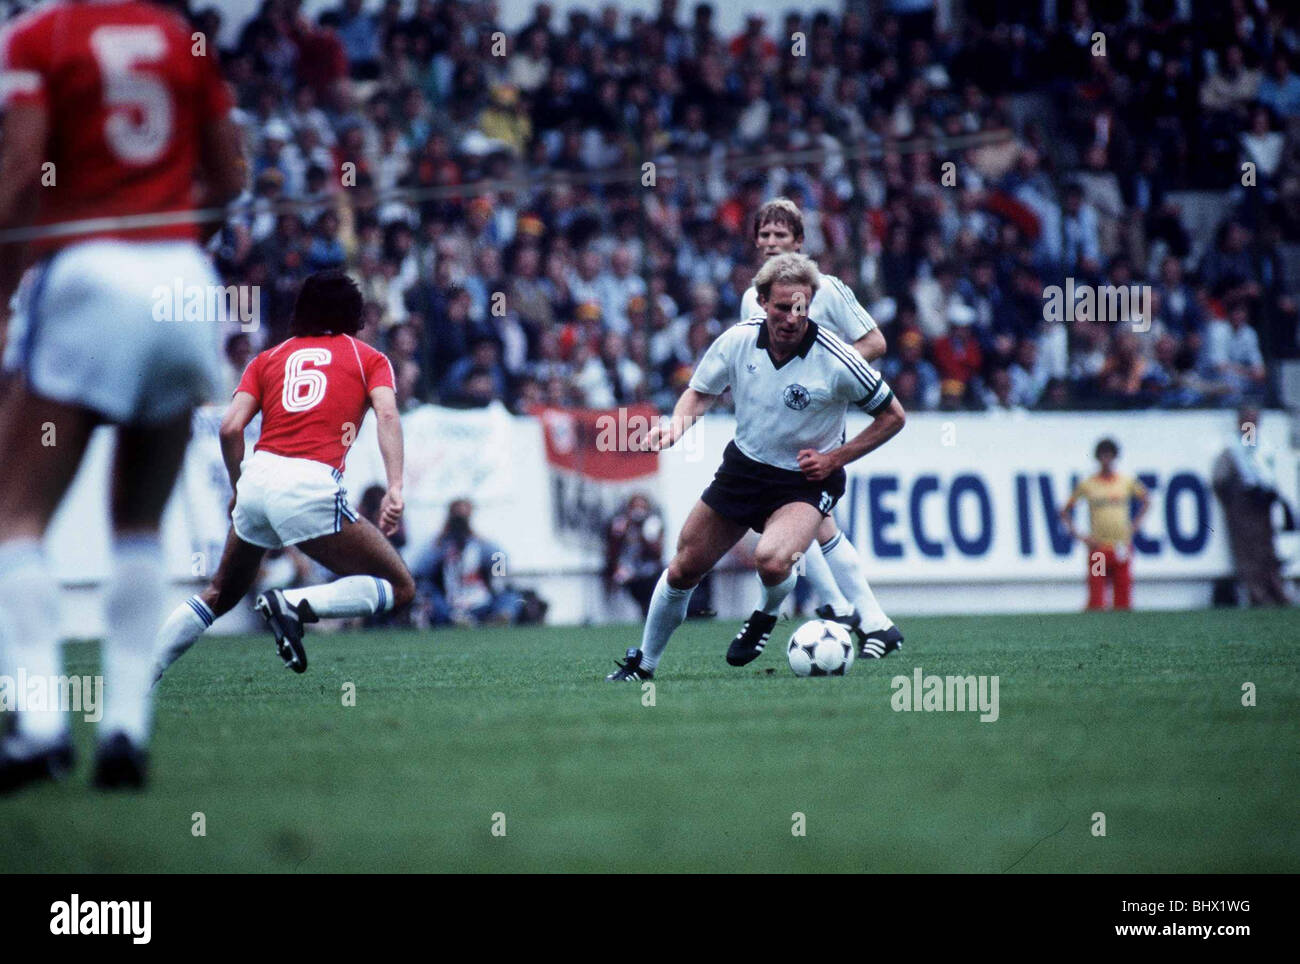 west-germany-4-chile-1-world-cup-1982-football-brubesch-white-followed-BHX1WG.jpg